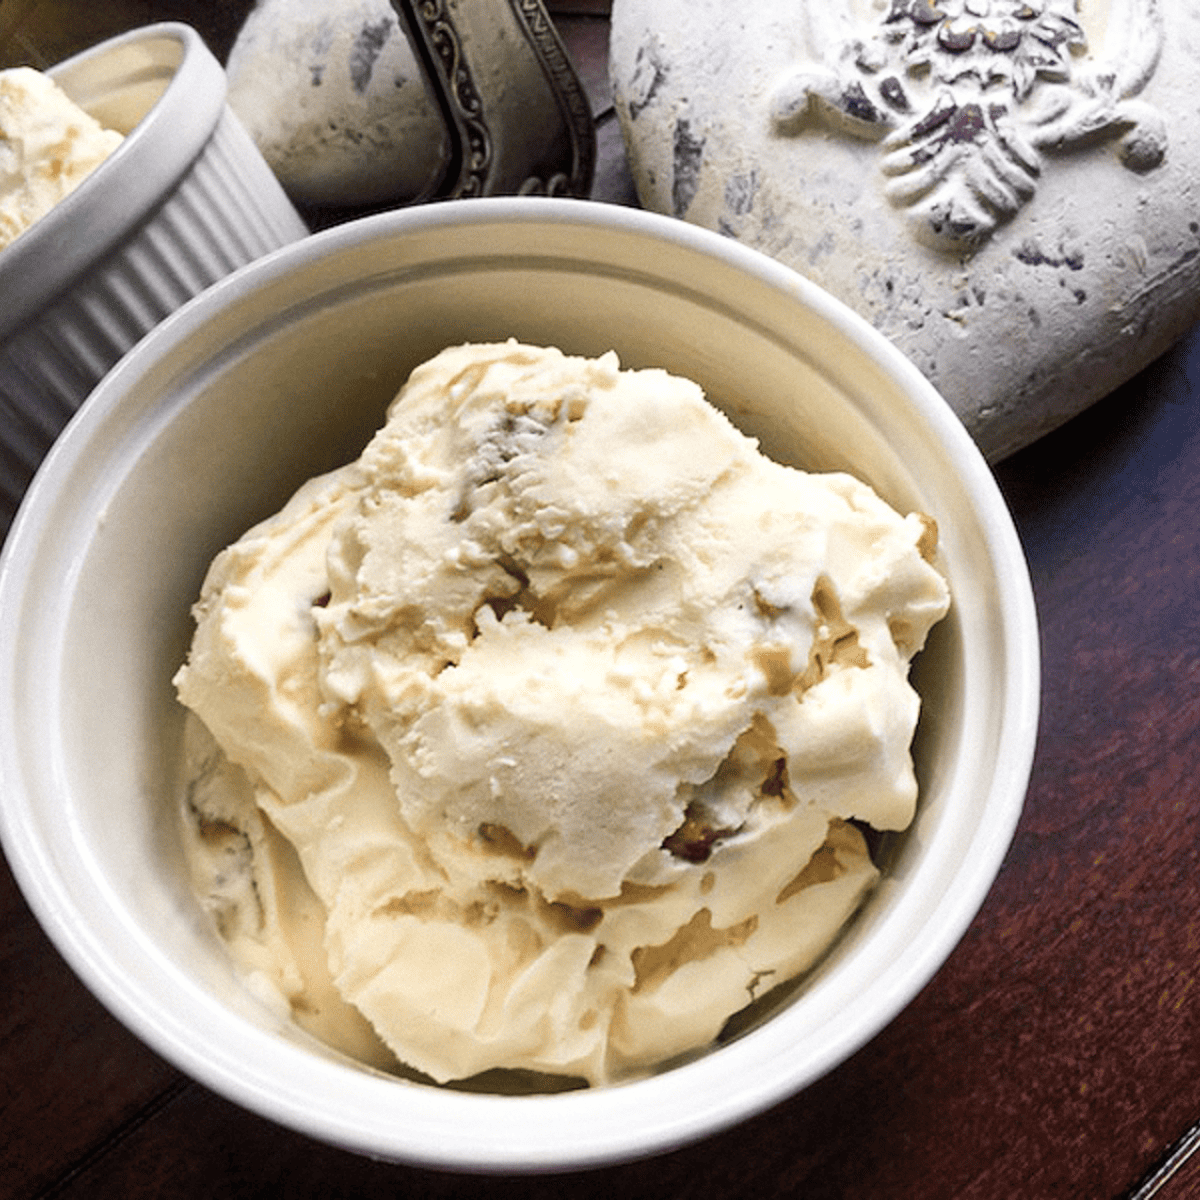 Create Delicious Frozen Treats with Ninja Creami Ice Cream Makers